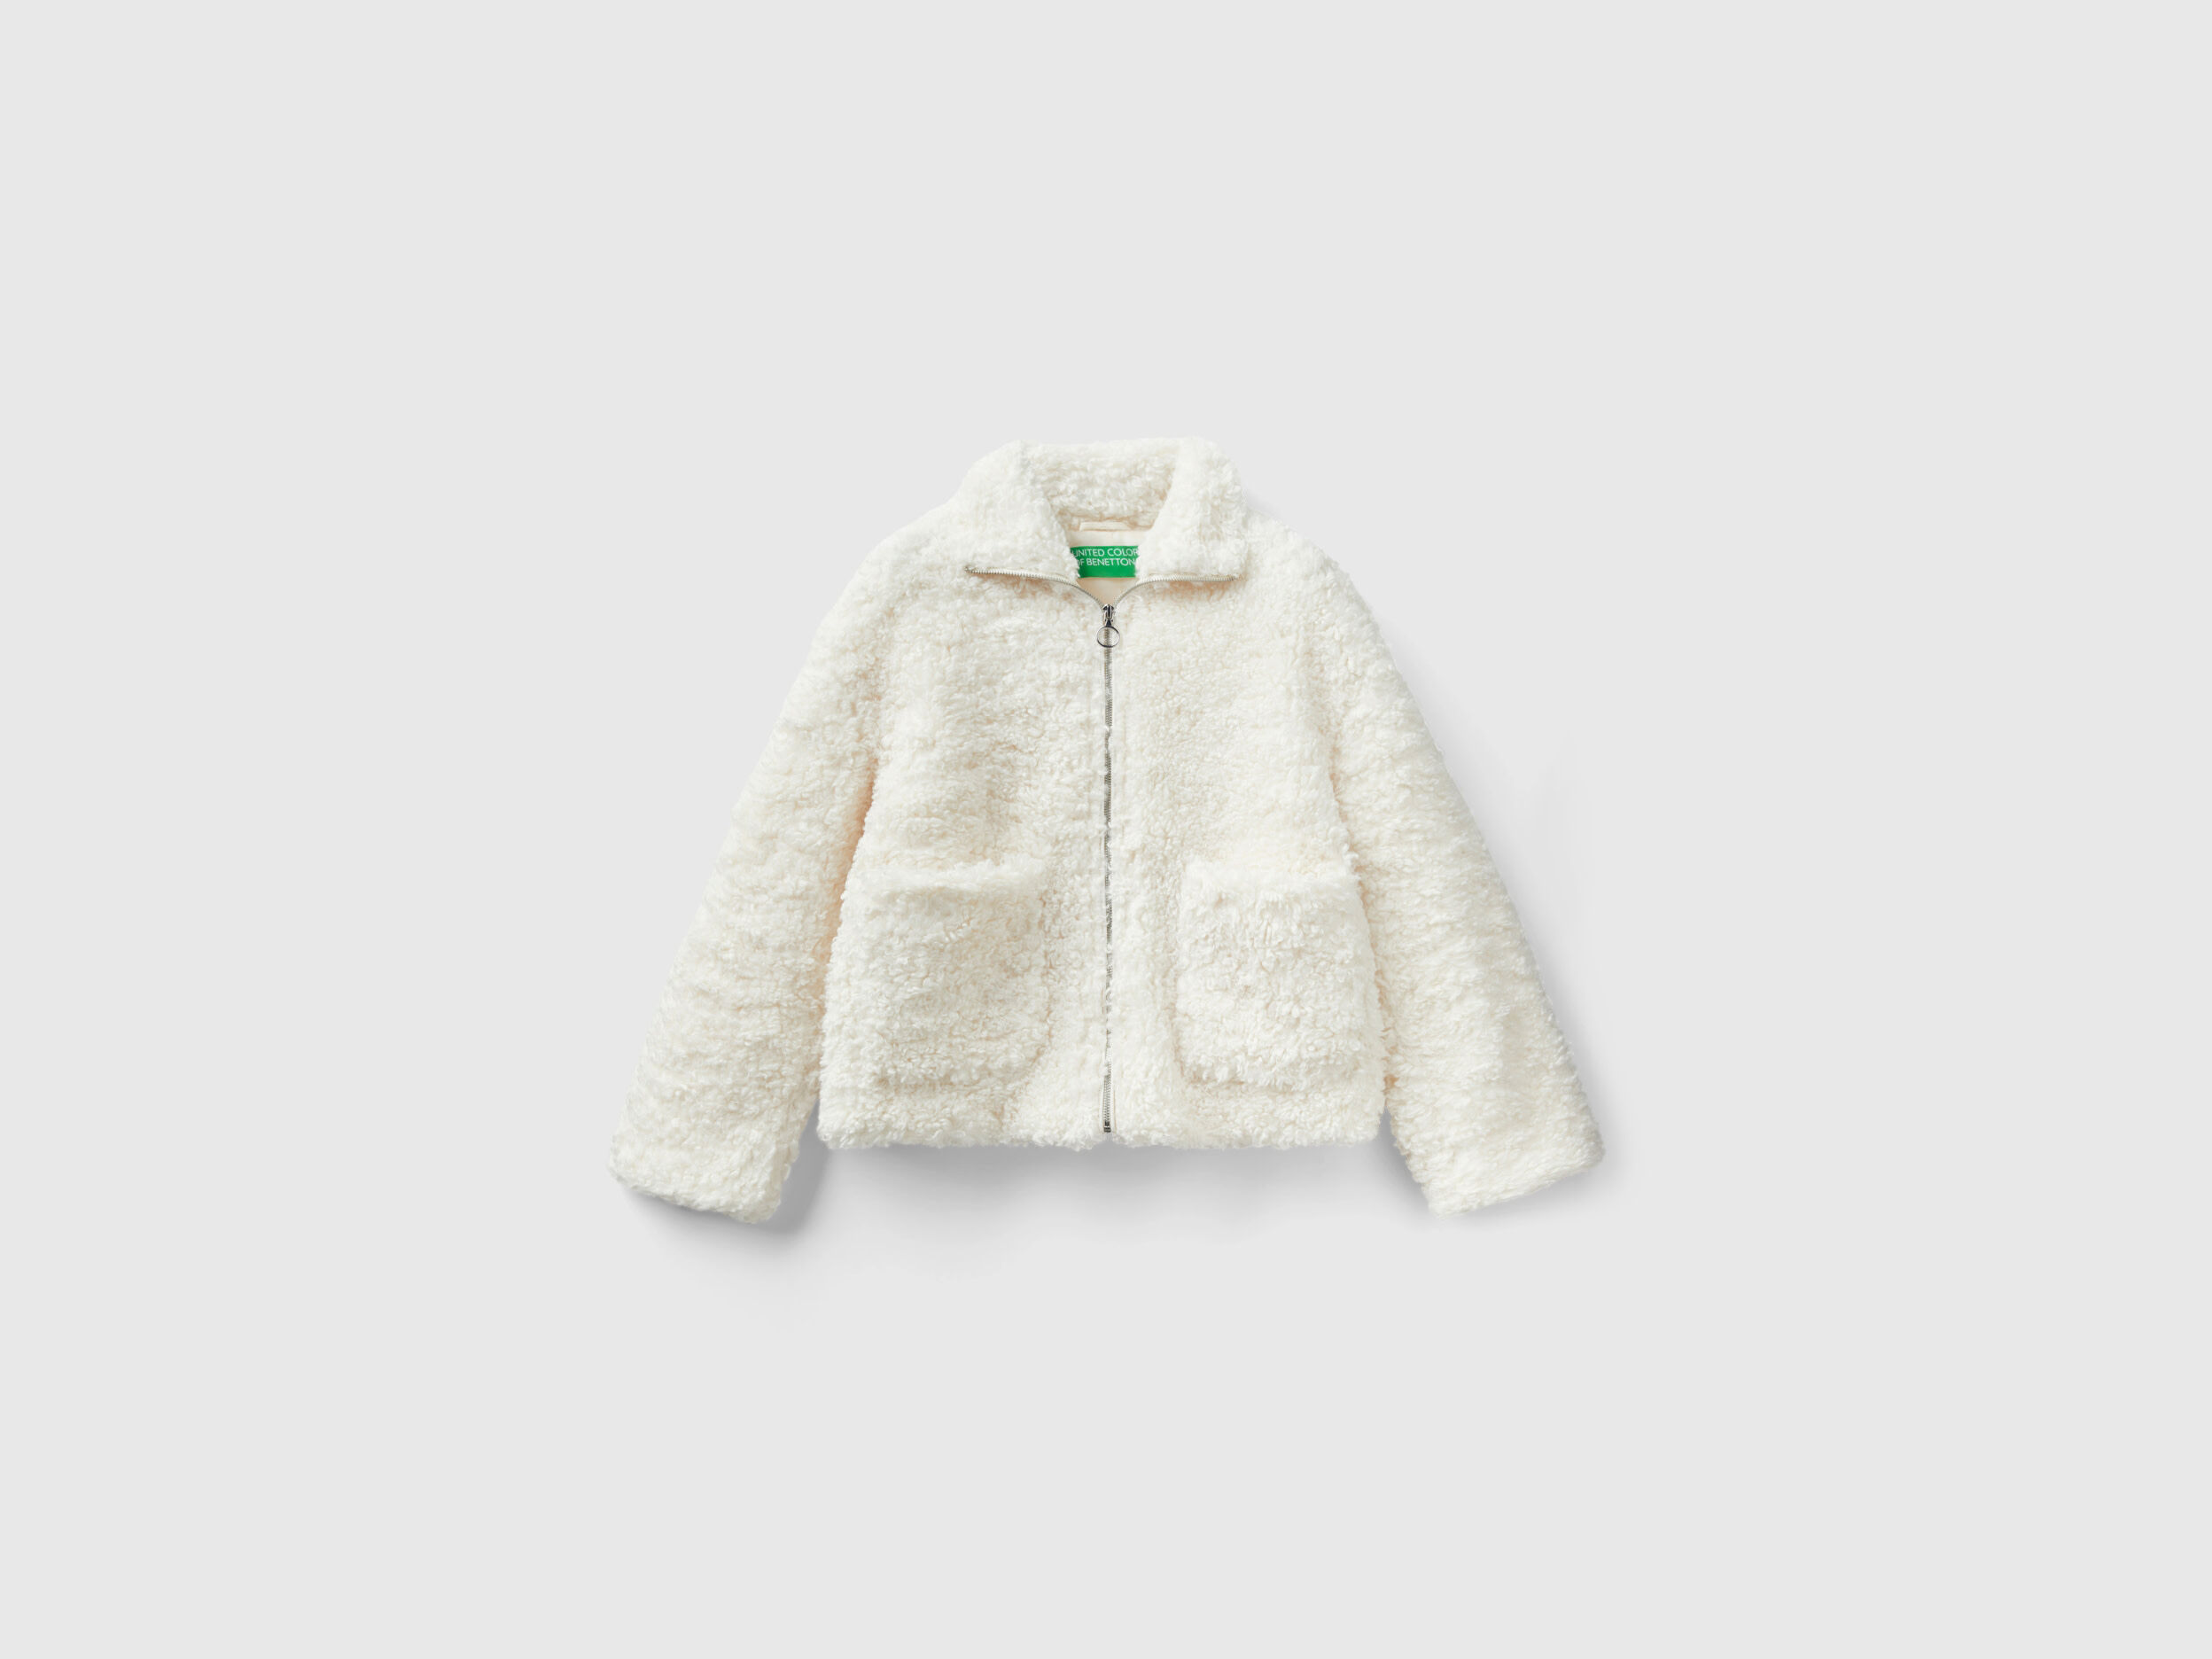 FREE SHIPPING Jacket Fluffy Faux Fur Coat JKP1348 | Fluffy faux fur coat, Fur  coats women, White fur coat